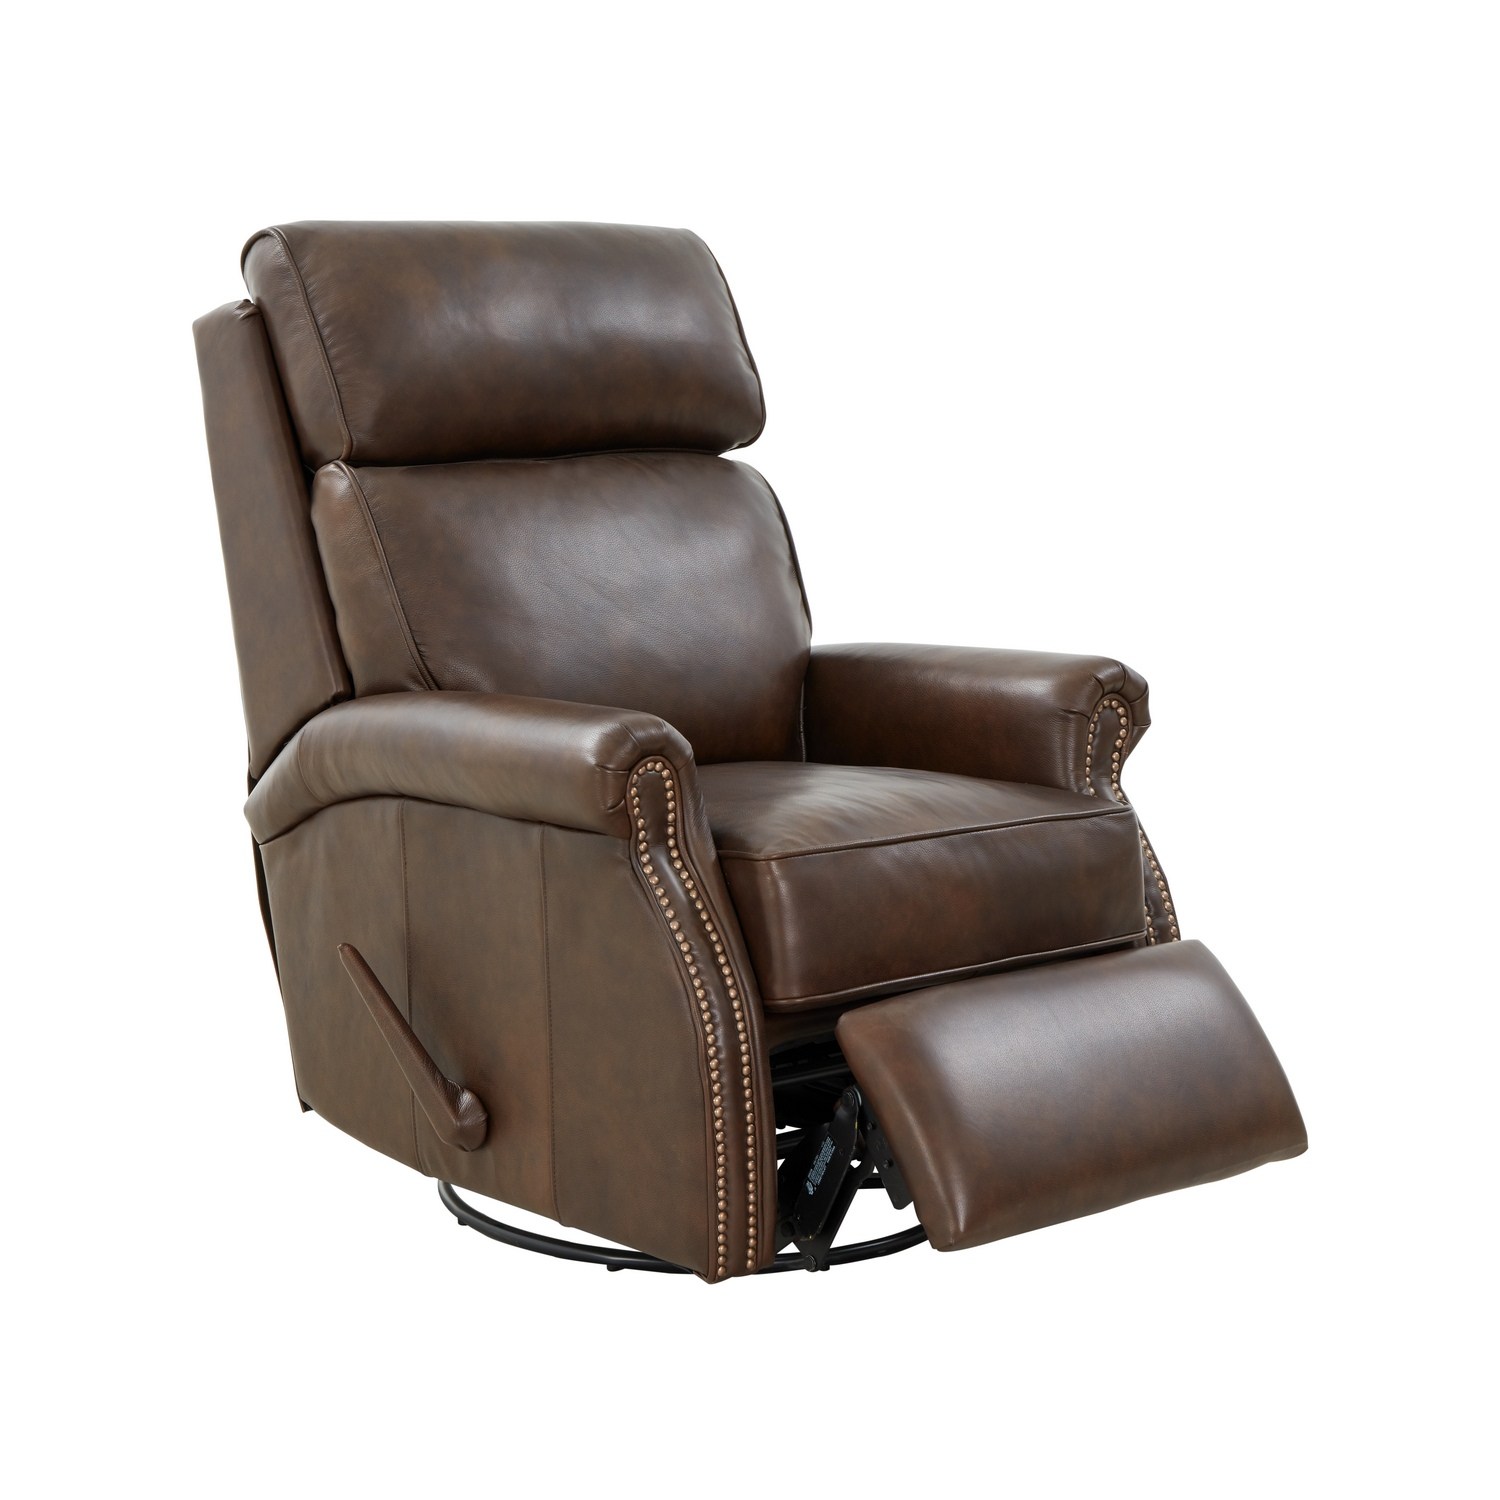 Barcalounger Crews Swivel Glider Recliner Chair - Ashford Walnut/All Leather